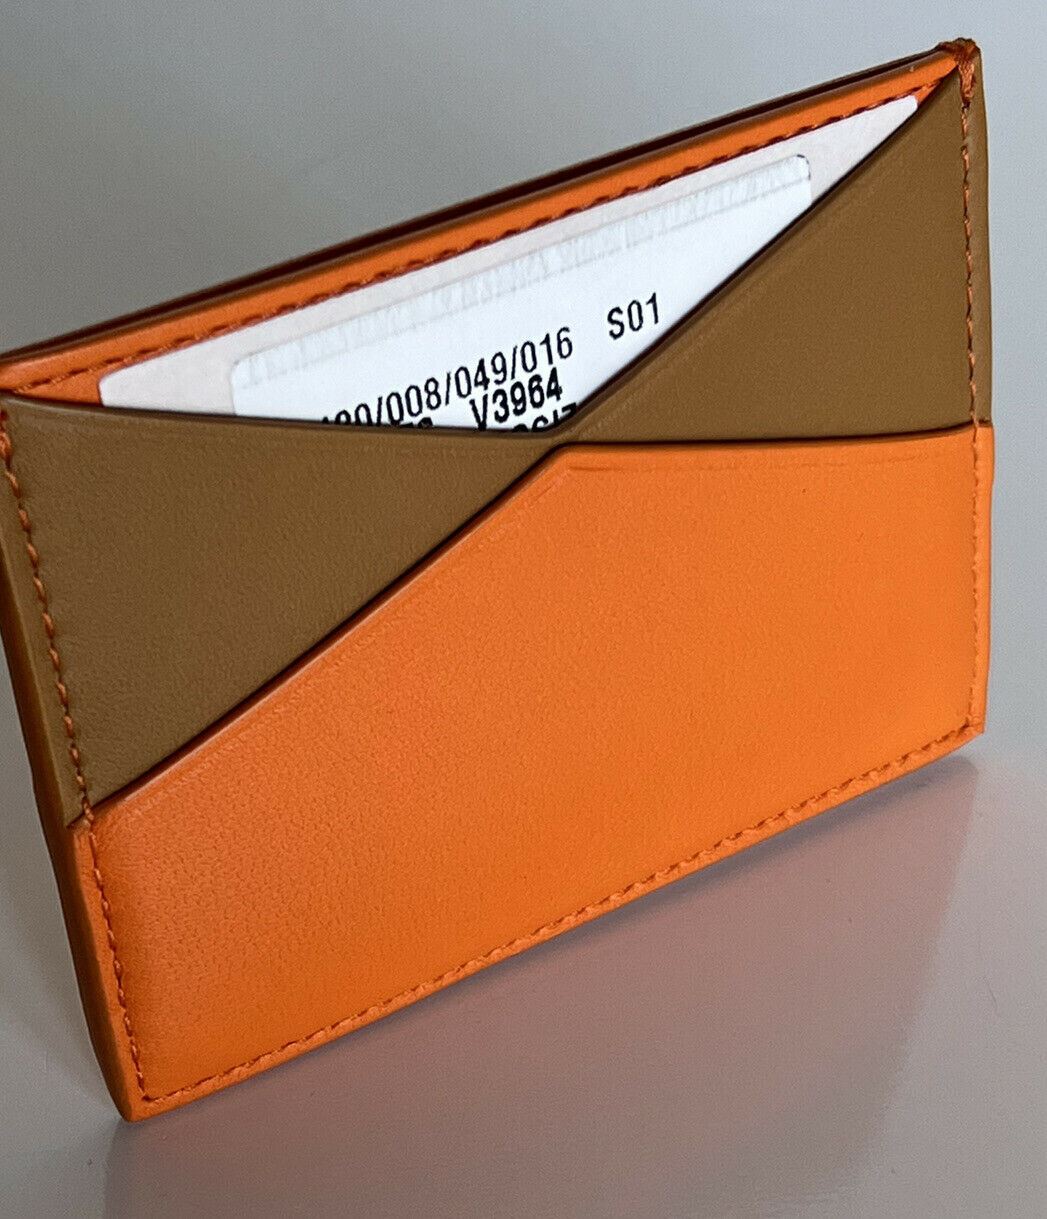 NWT $270 Bottega Veneta Women's Leather Card Case Light Orange, Caramel 597976